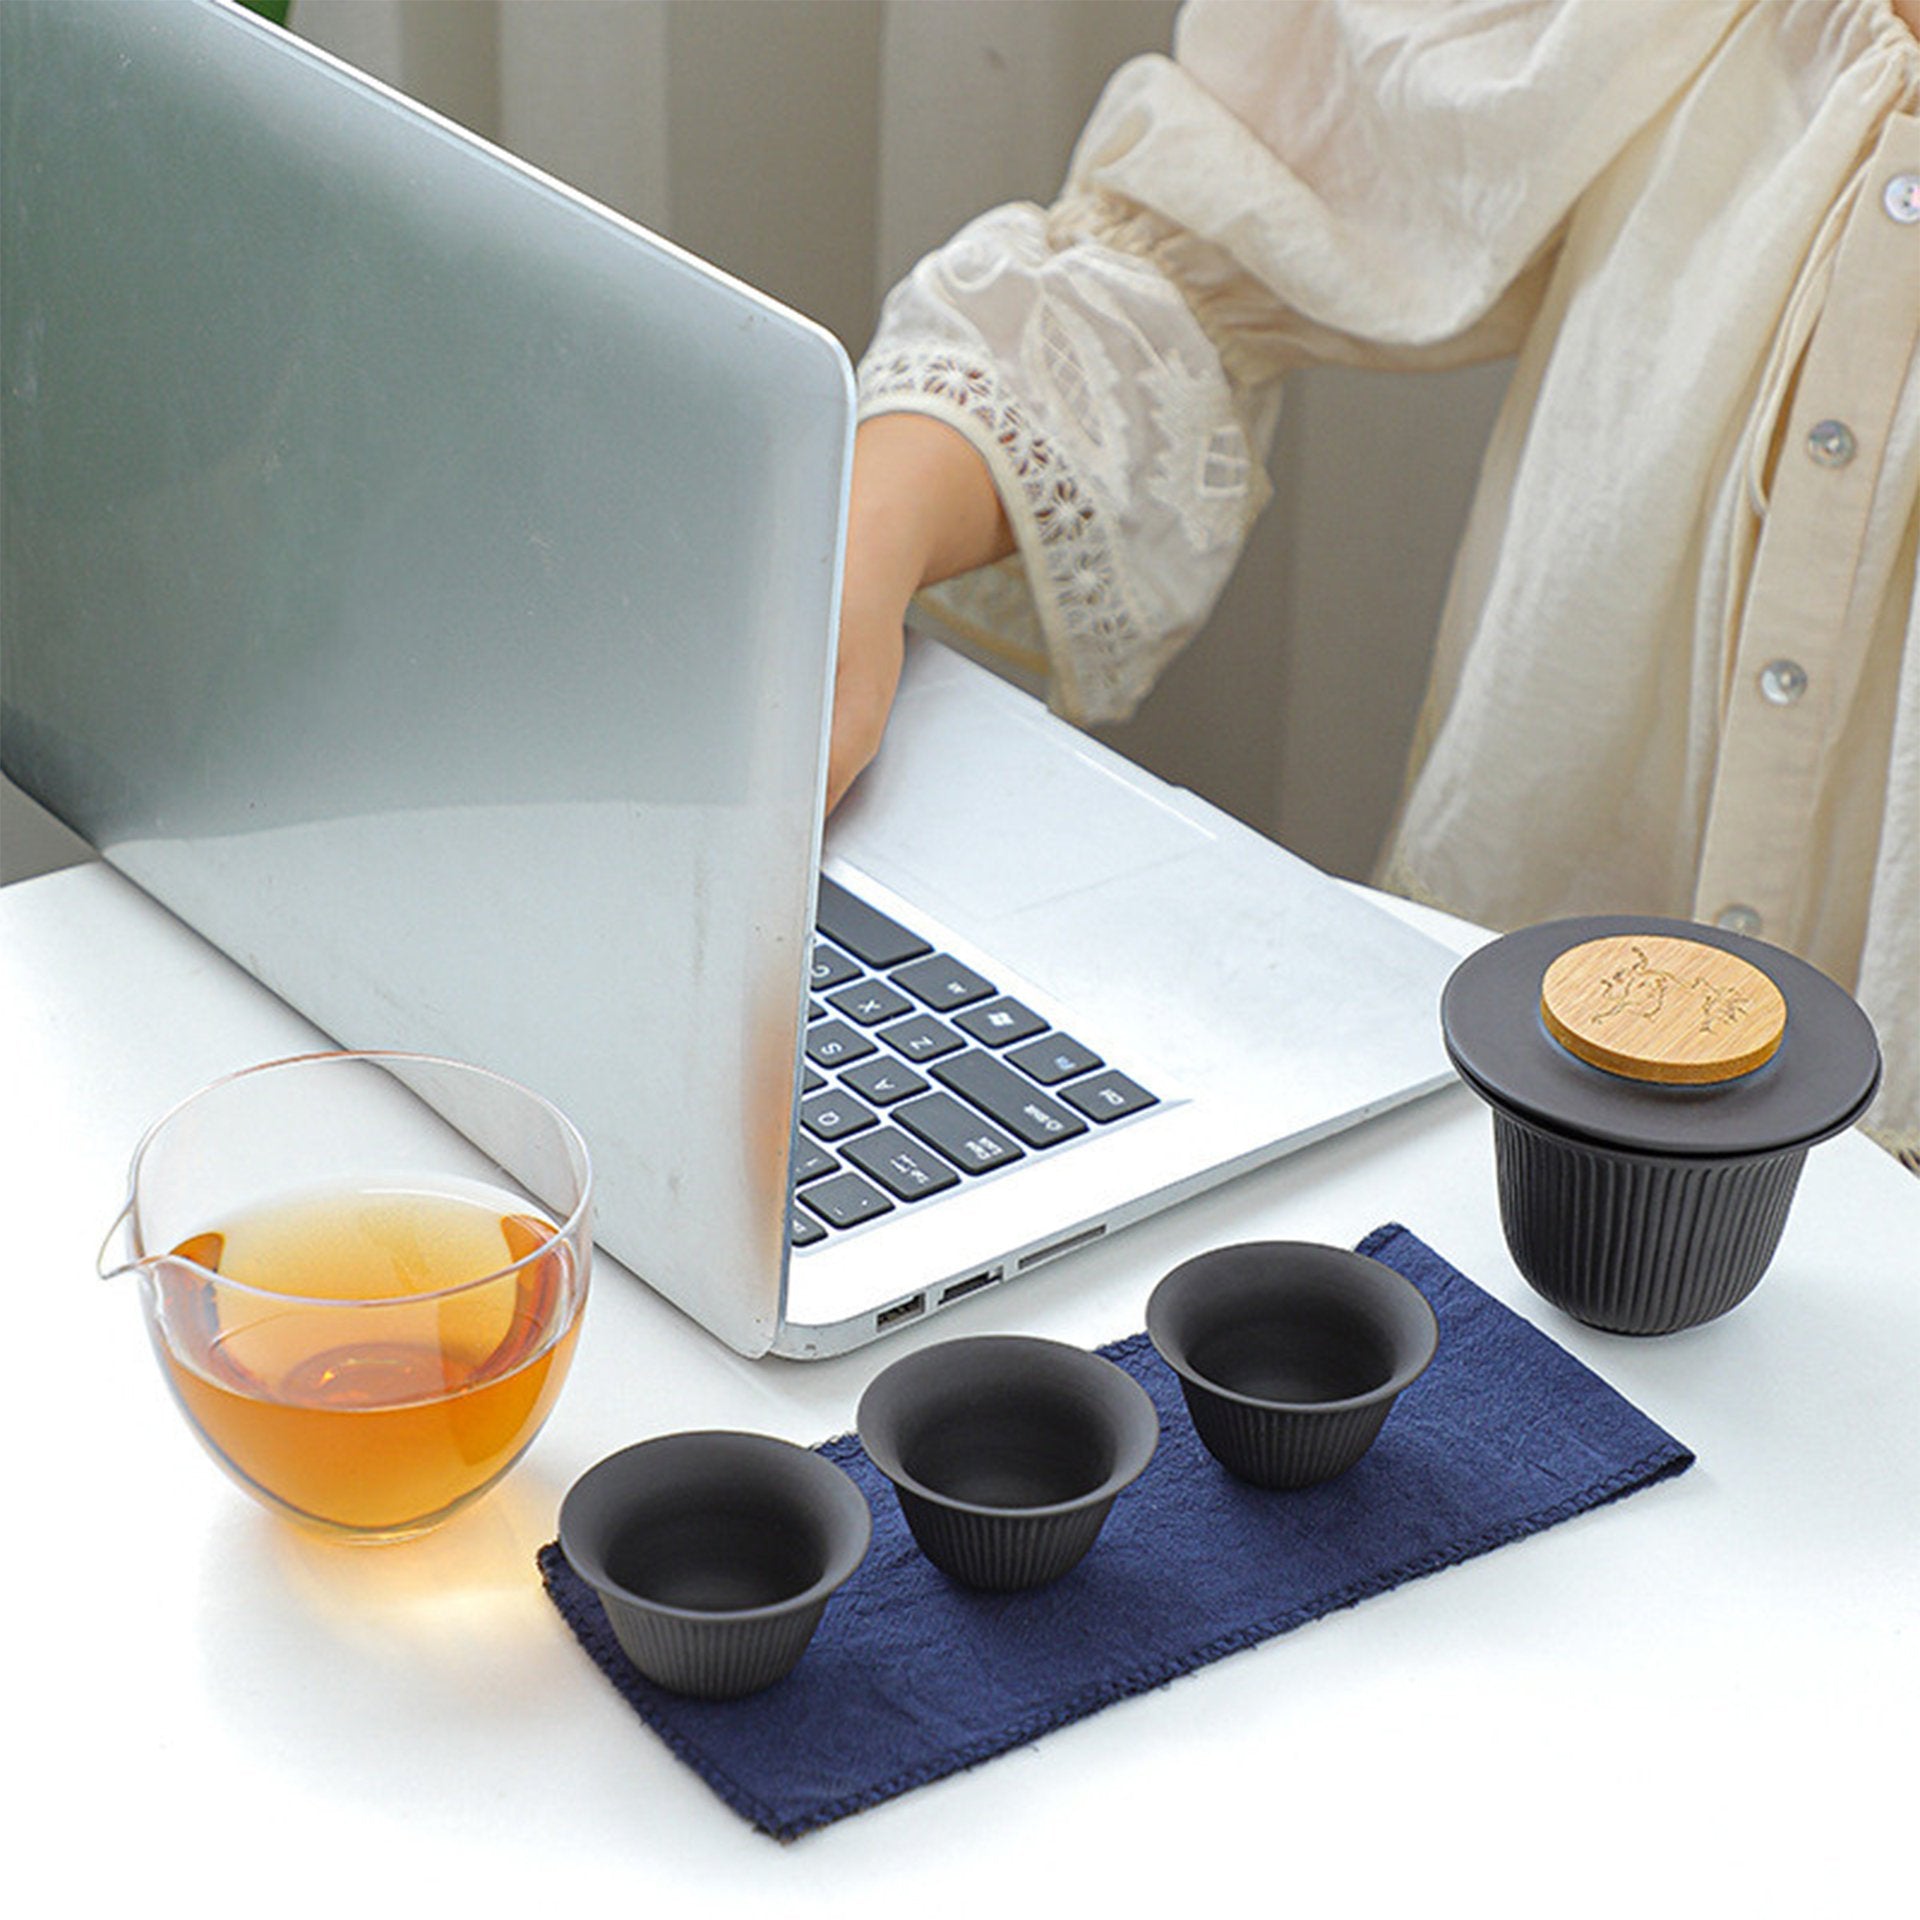 Tea set by a laptop on a desk, ready for a tea break.